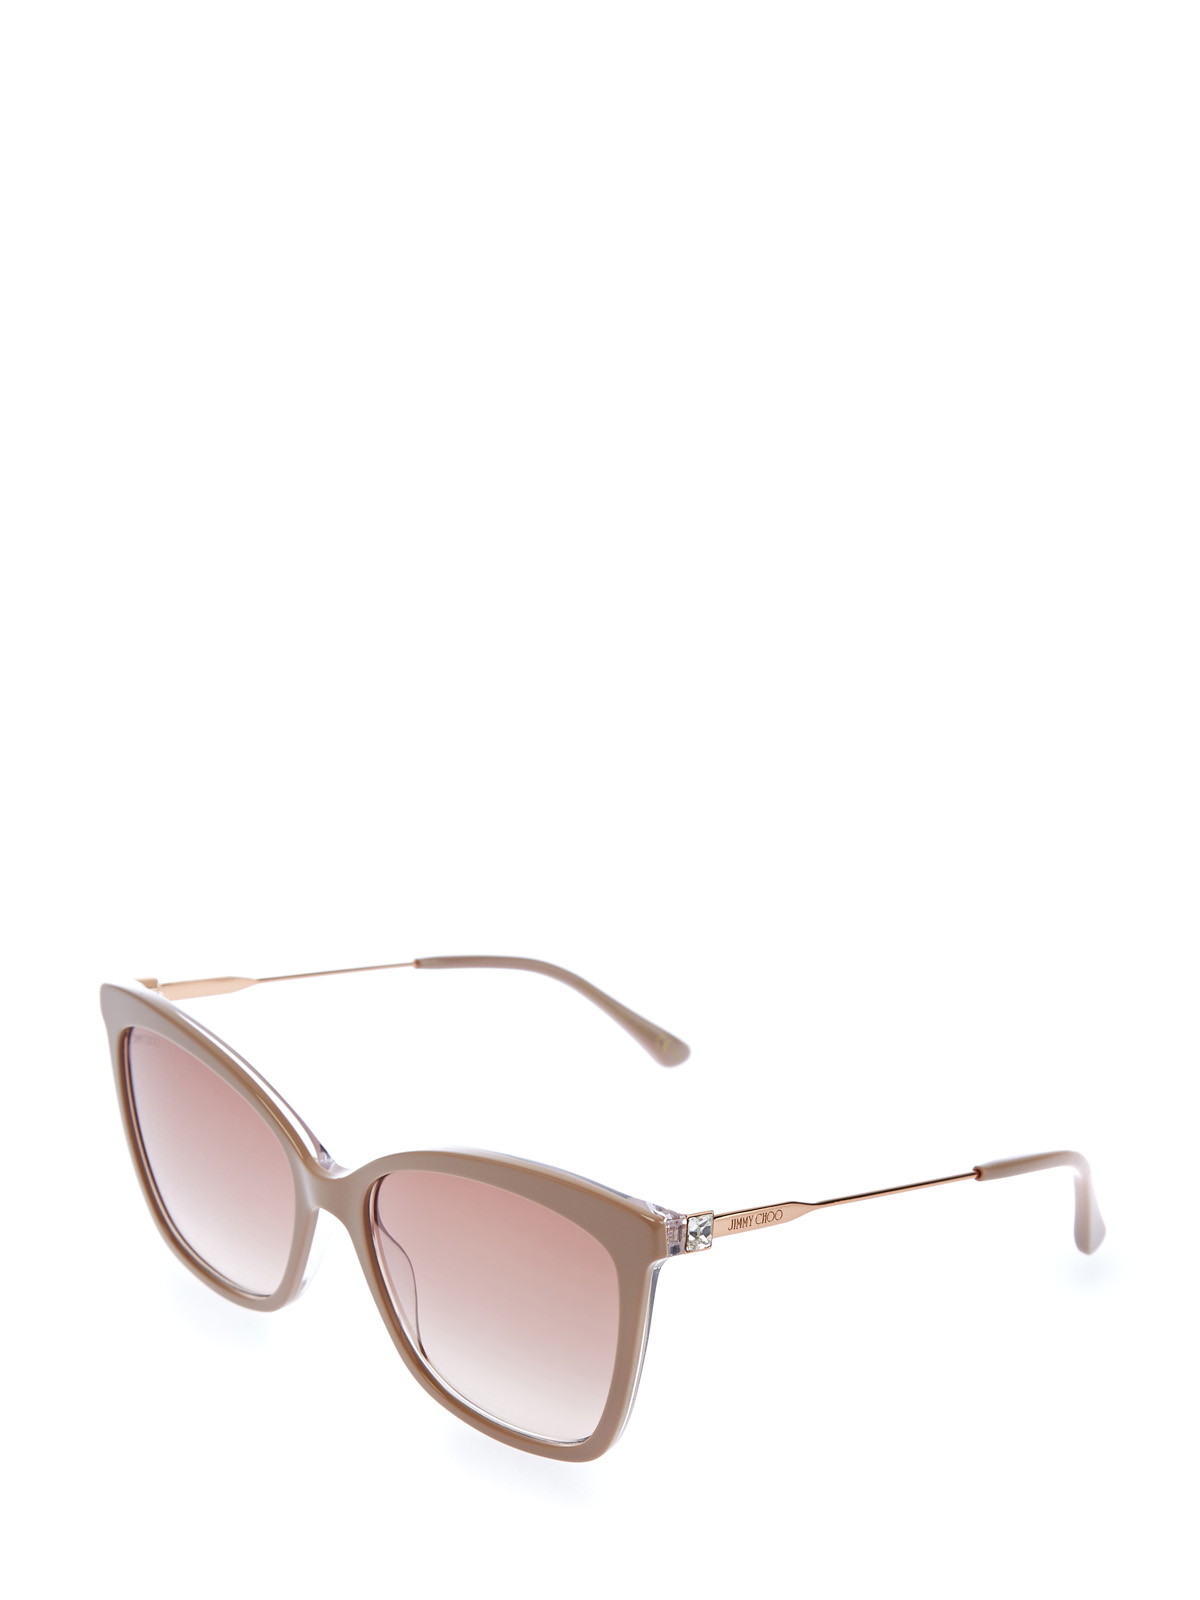 Солнцезащитные очки Maci с кристаллами Swarovski JIMMY CHOO  (sunglasses), цвет розовый - фото 2